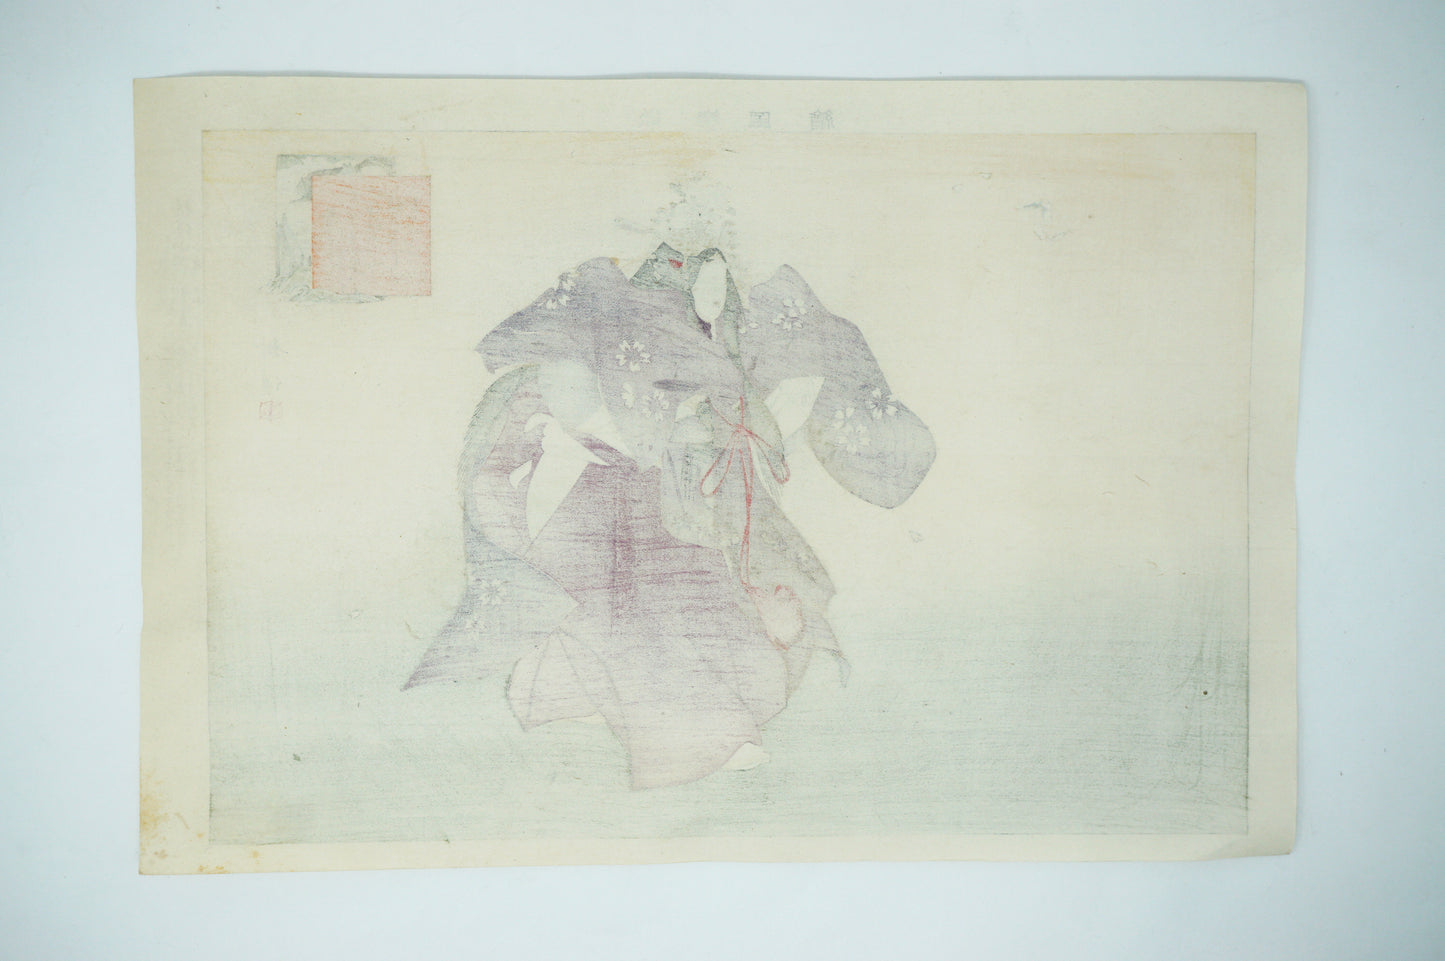 Japanese Woodblock Print Original by Tsukioka Kogyo Noh or Kyôgen Theatre from Japan 1212D15